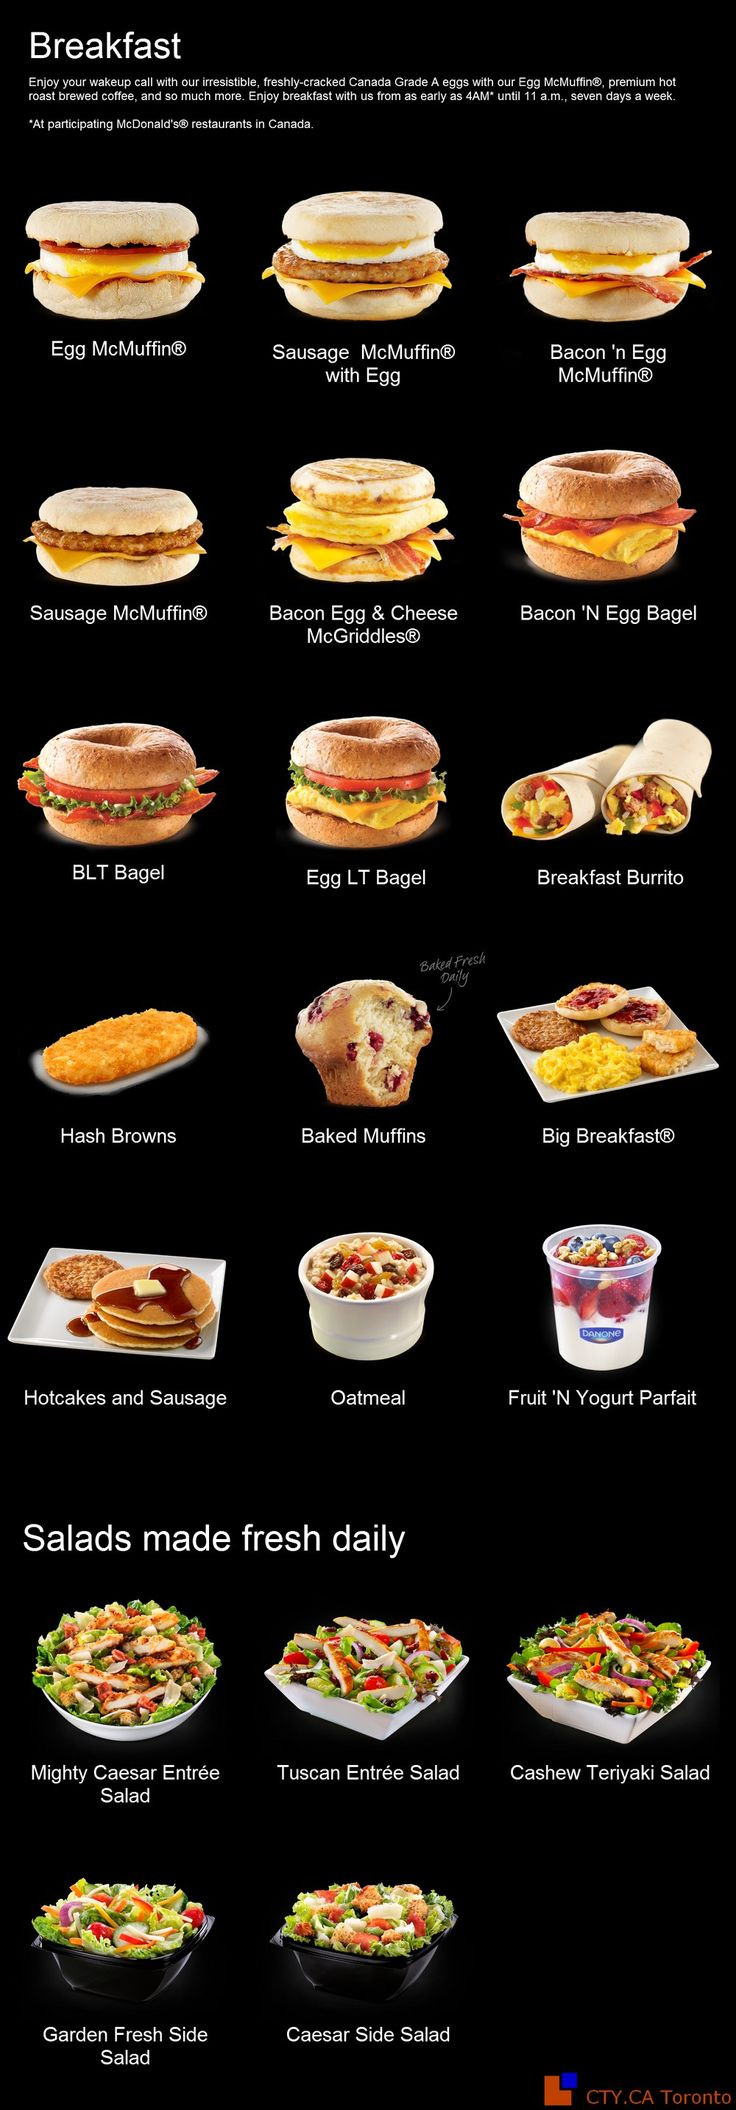 Mcdonalds Healthy Breakfast Menu
 30 best images about Picture Fast Food Menus on Pinterest